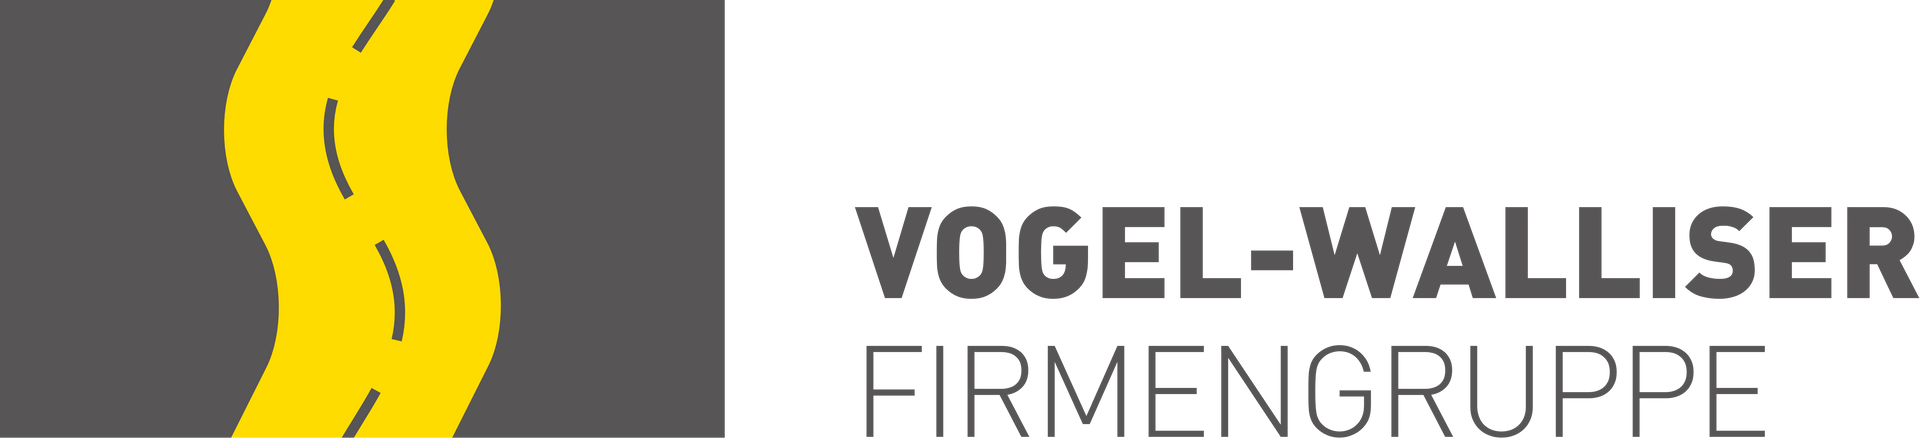 Vogel-Walliser Firmengruppe